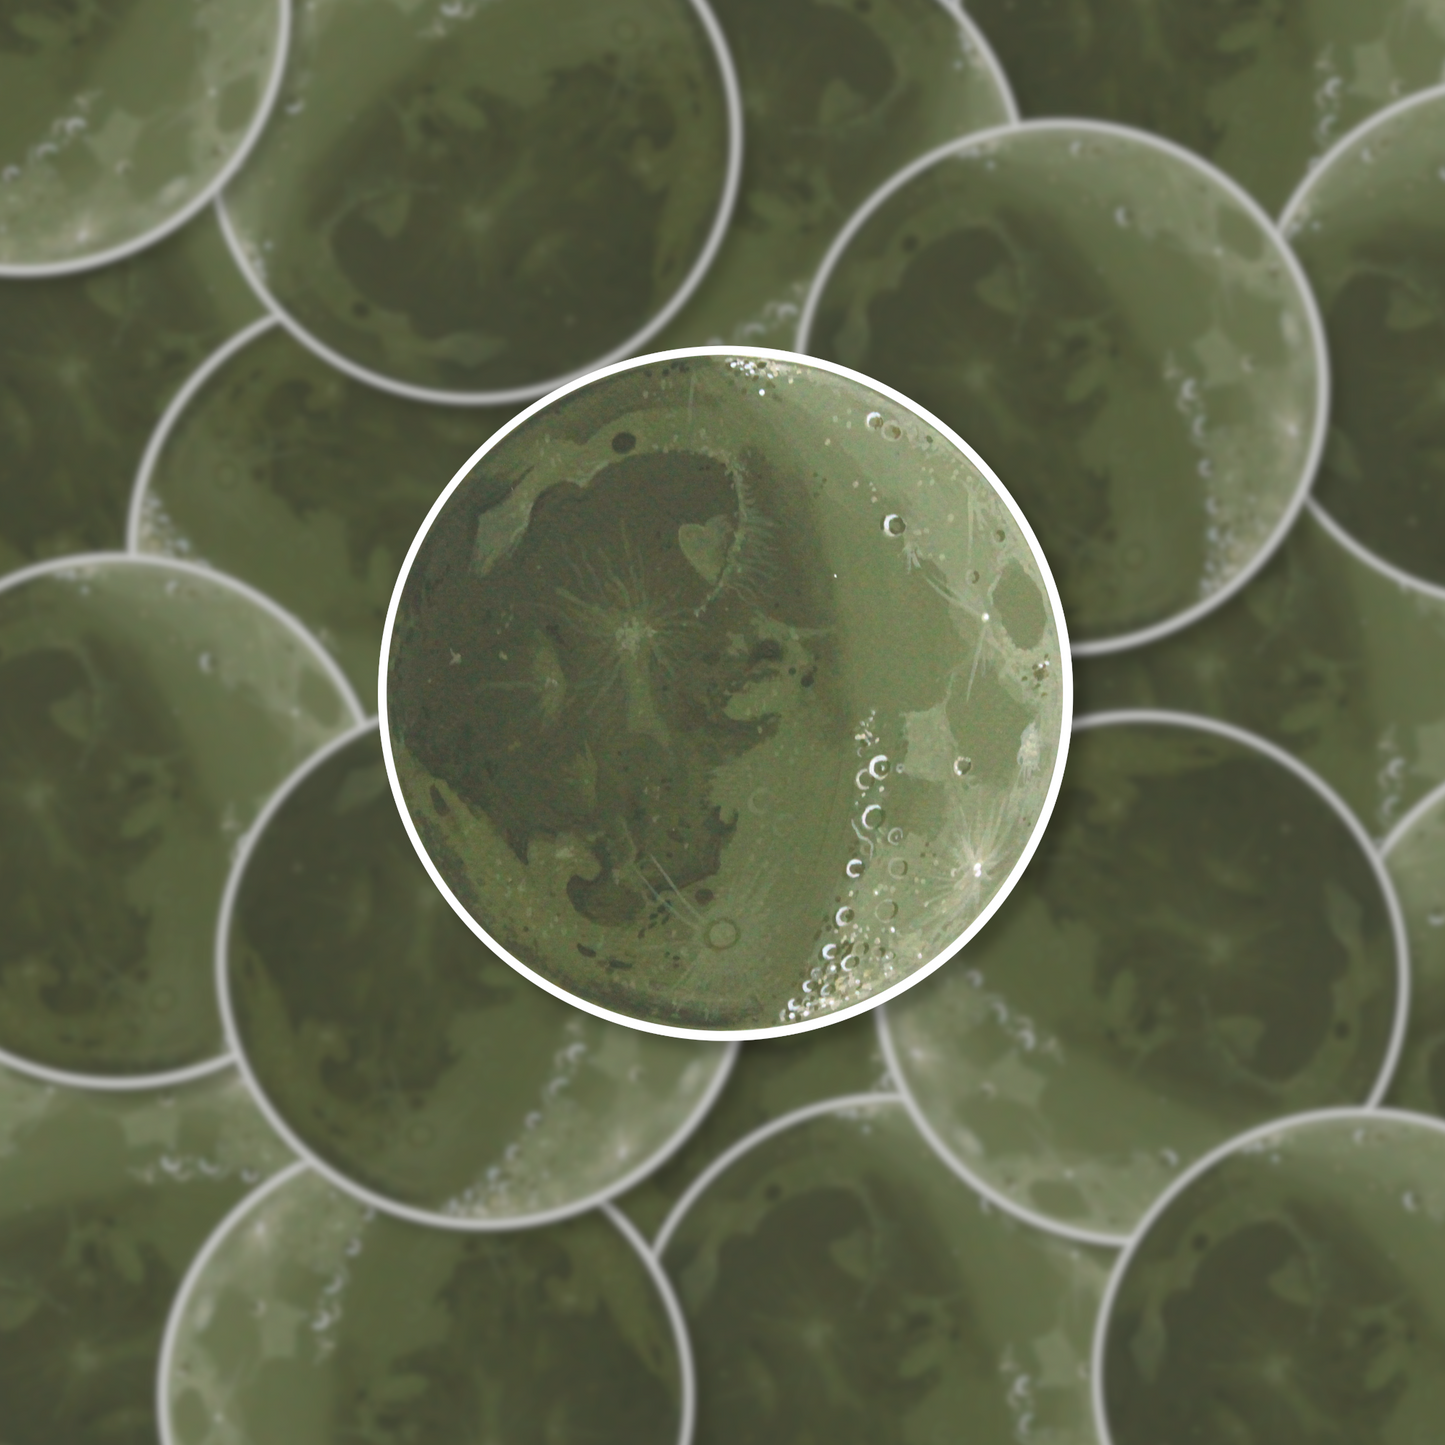 Mossy Green Moon Sticker